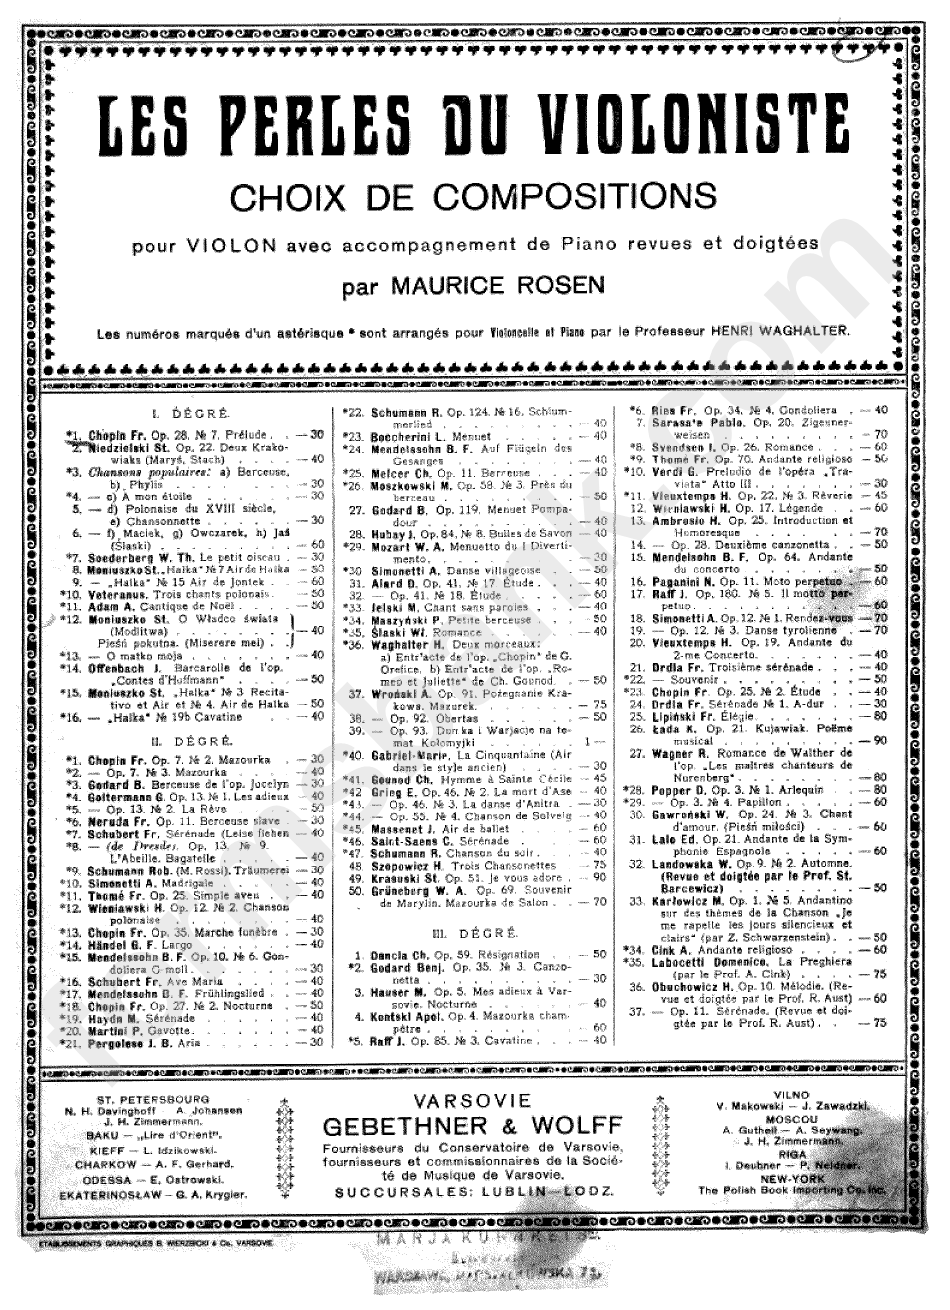 Chopin - Prelude Sheet Music